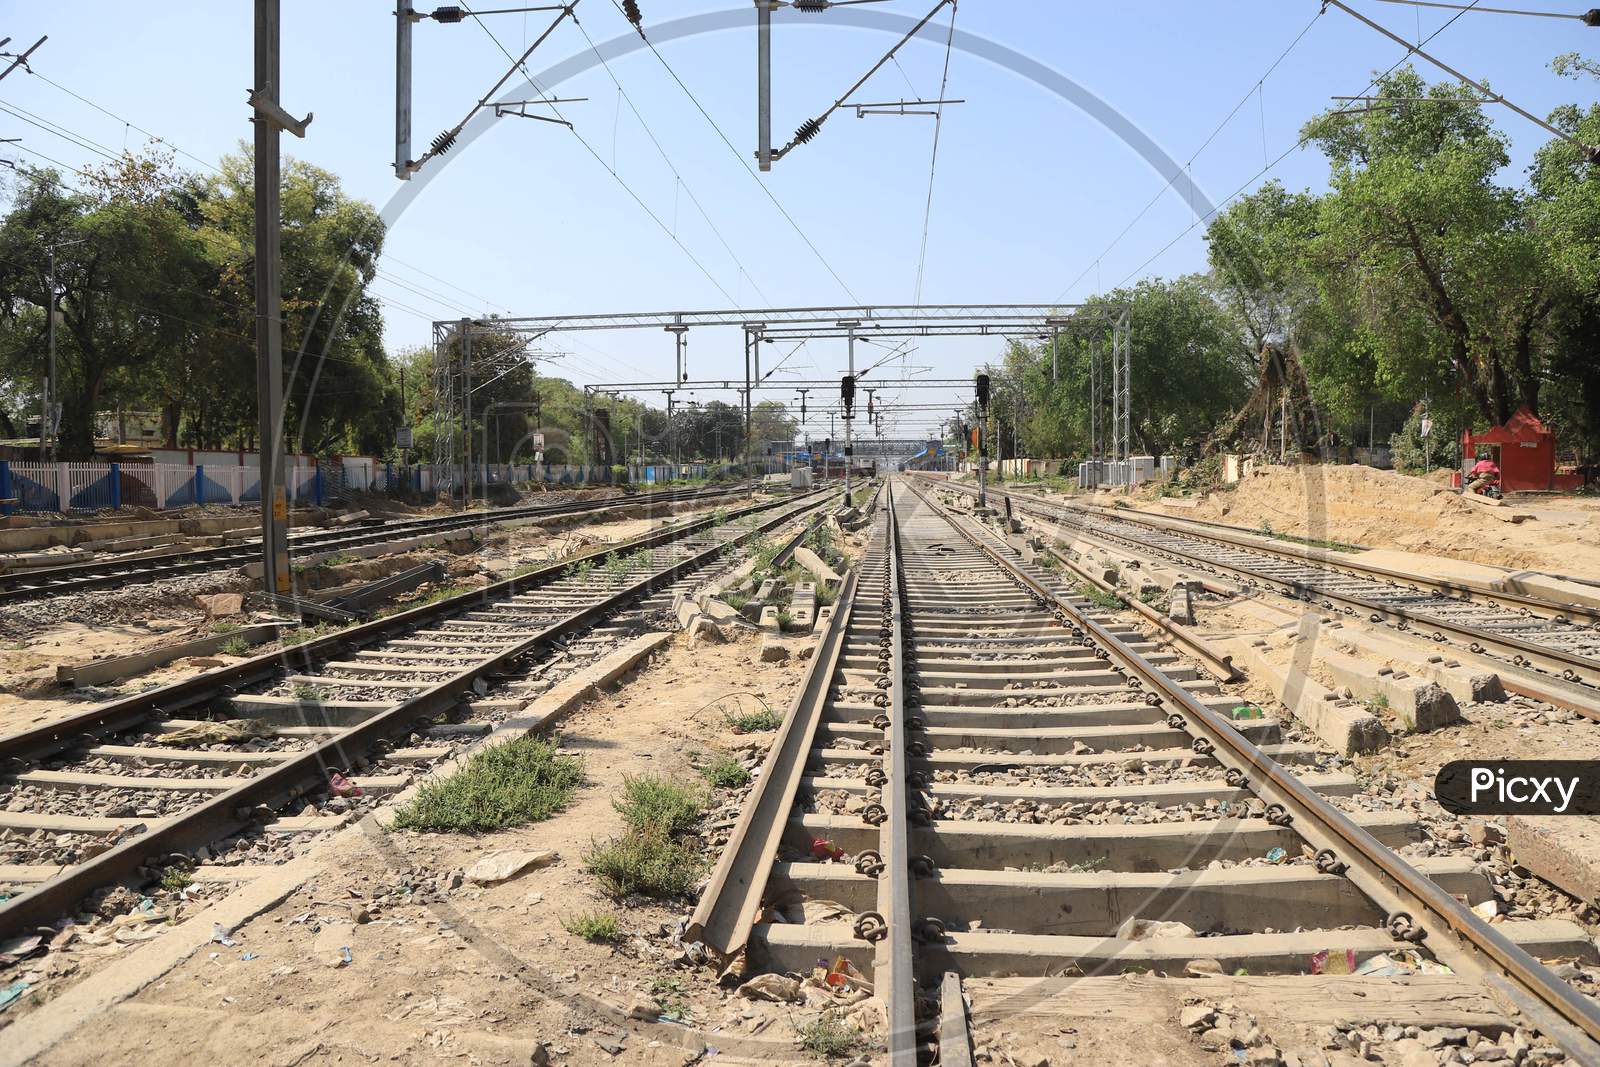 Trains Stand On Railway Track During Nationwide Lockdown In Wake Of Coronavirus Pandemic At Prayag Railway Station In Prayagraj, March 10, 2020.